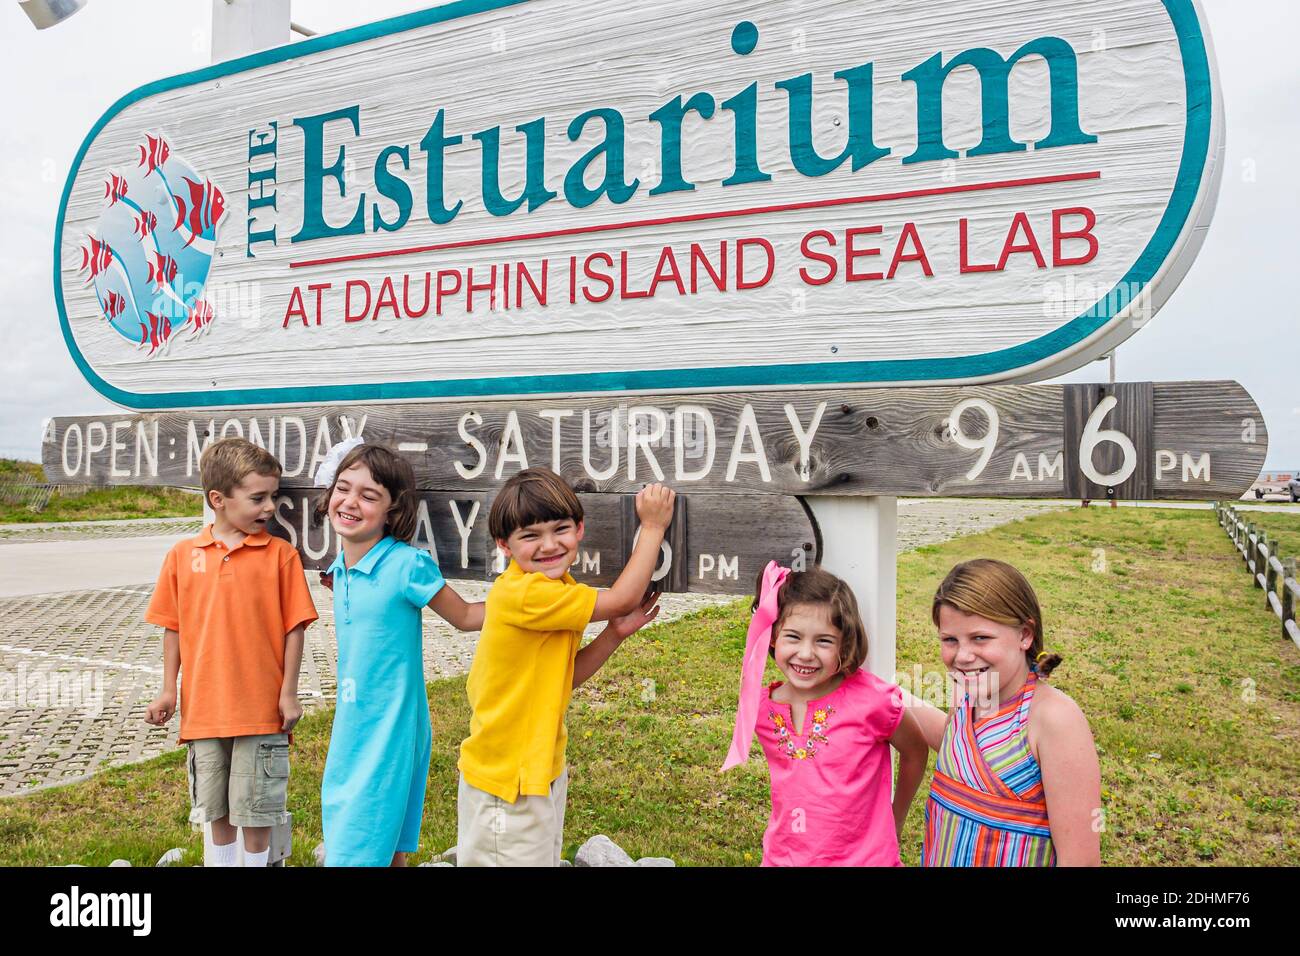 Alabama Dauphin Island Sea Lab Estuarium public aquarium,outside kids boys girls entrance sign, Stock Photo